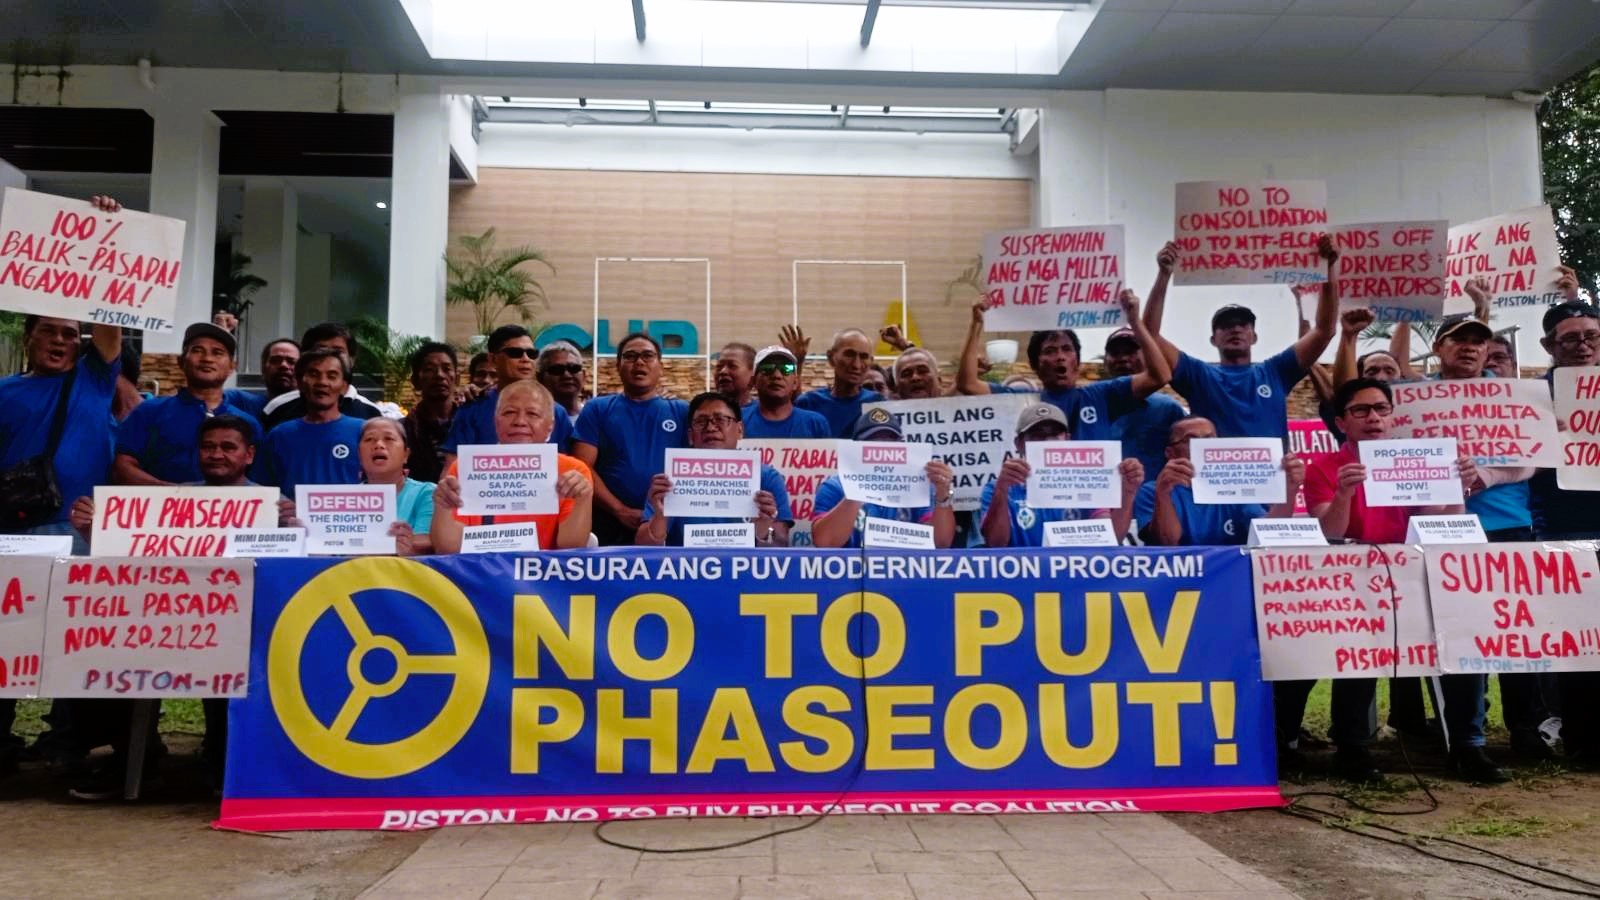 PISTON calls for a nationwide transport strike to protest the PUV Modernization Program